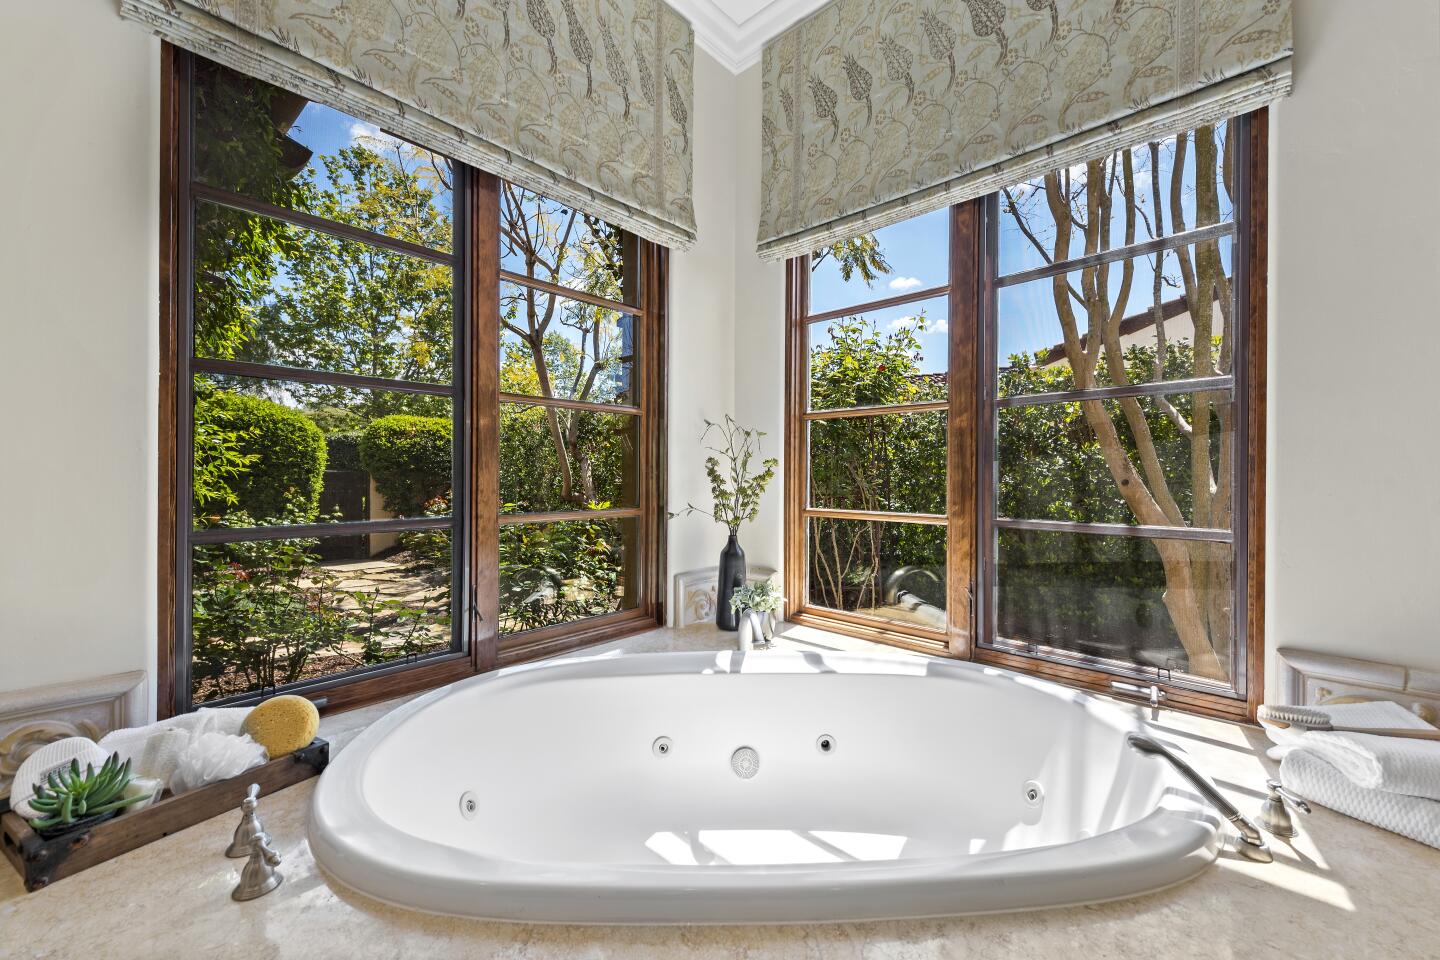 The master bath features a sun-lit soaking tub.